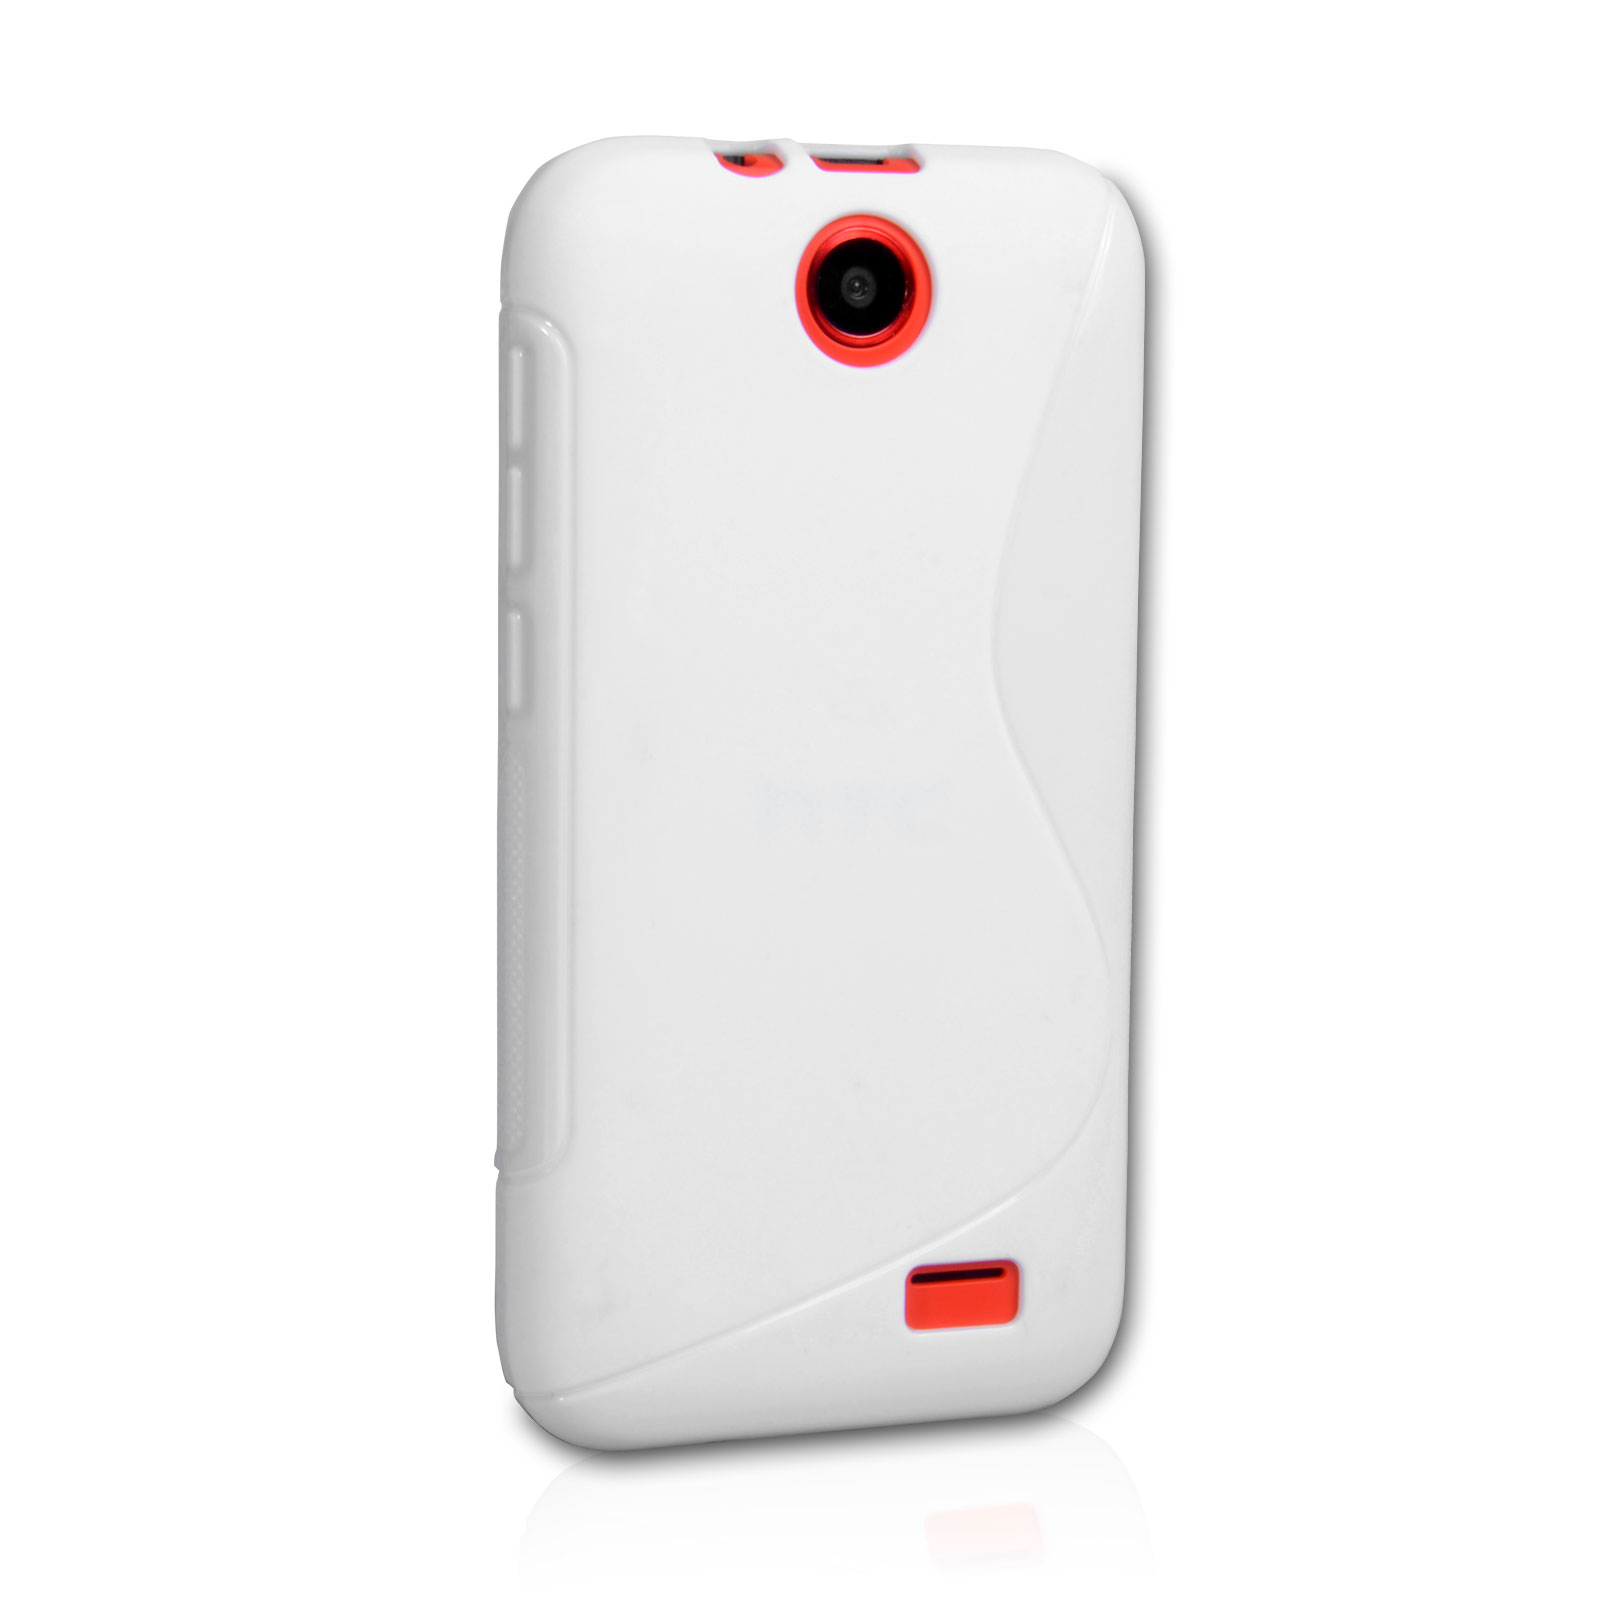 Caseflex HTC Desire 310 Silicone Gel S-Line Case - White